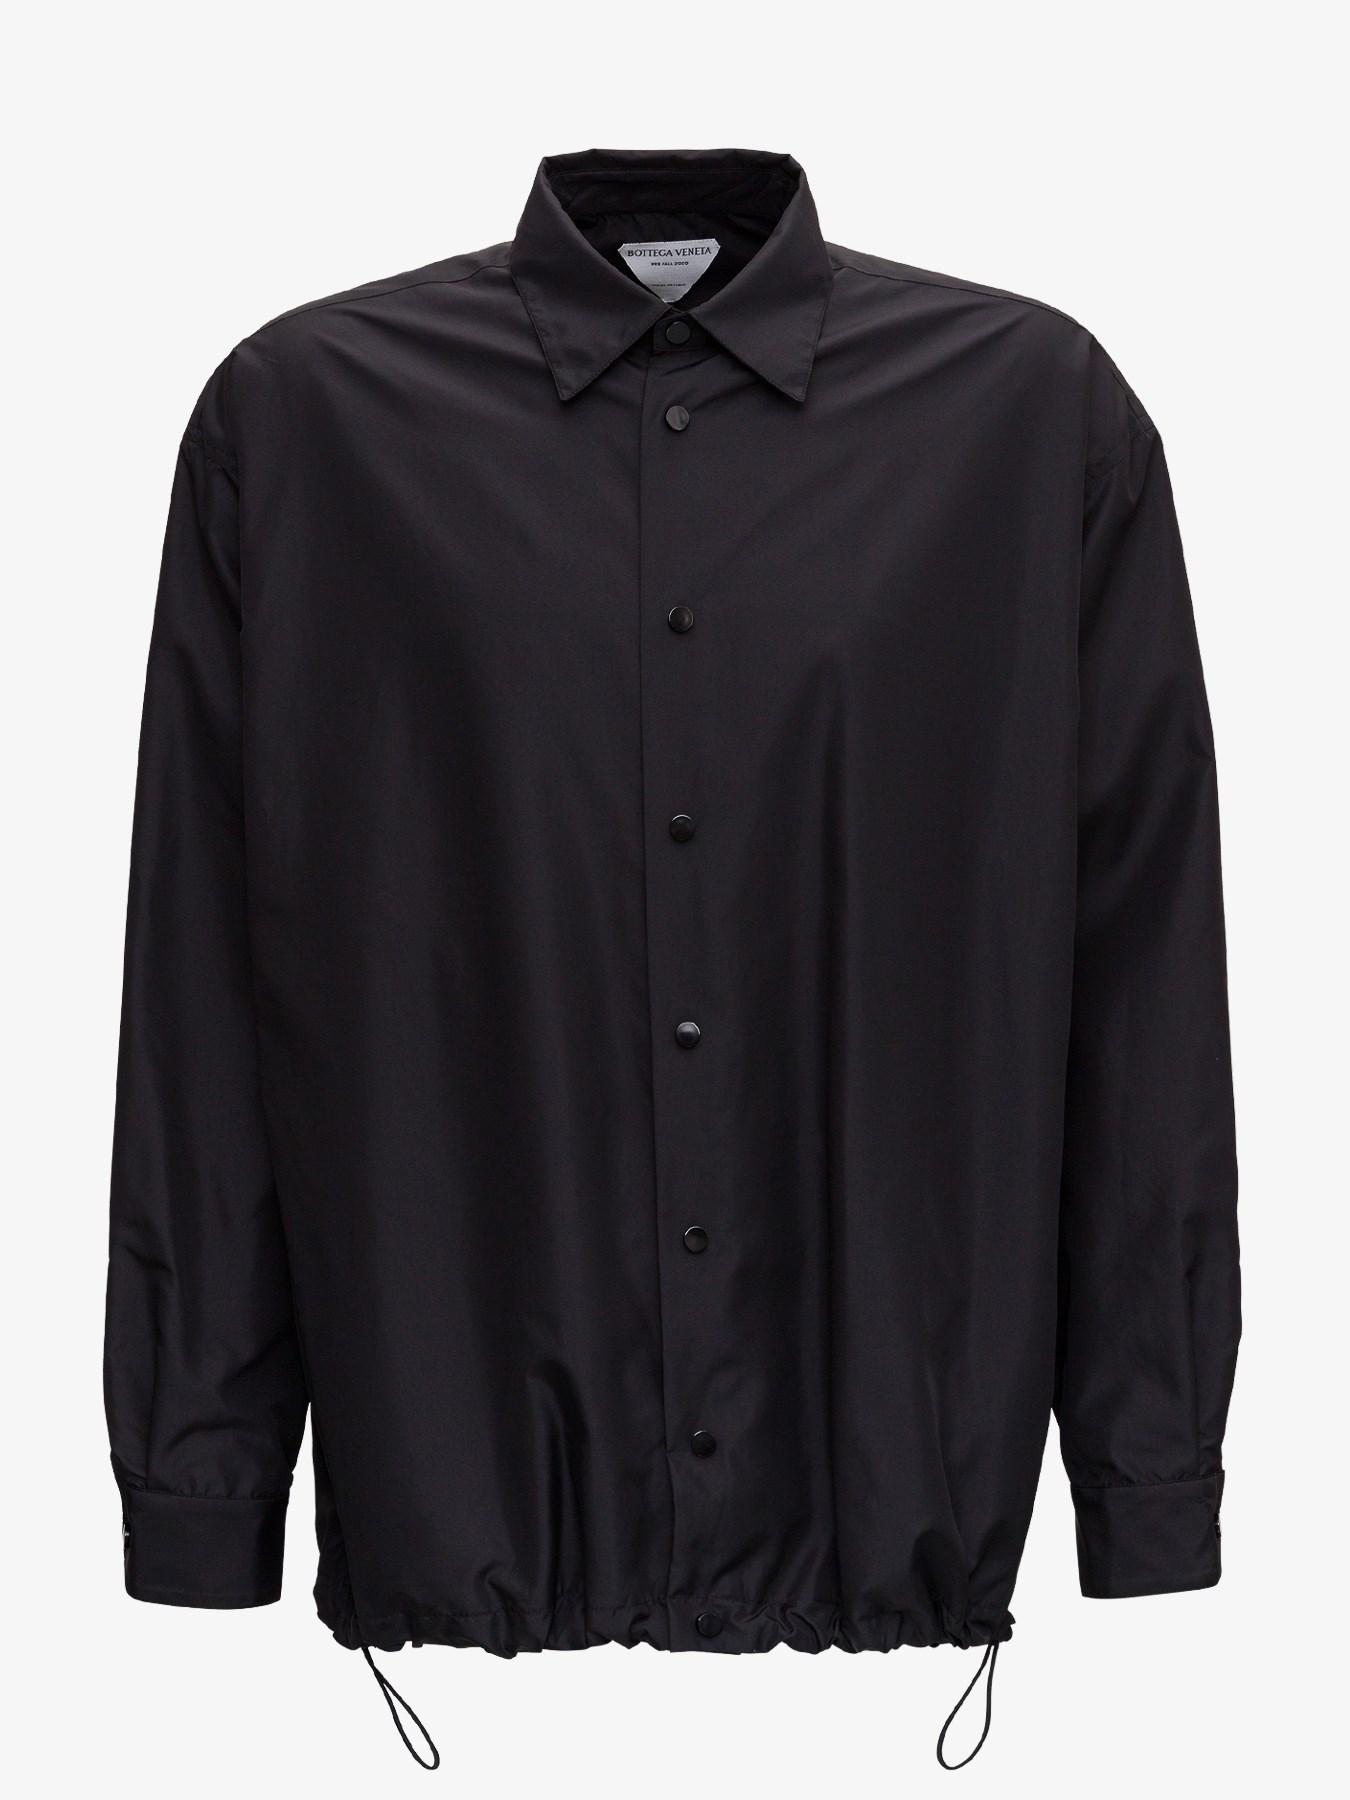 Bottega Veneta Synthetic Nylon Jacket in Black for Men - Lyst